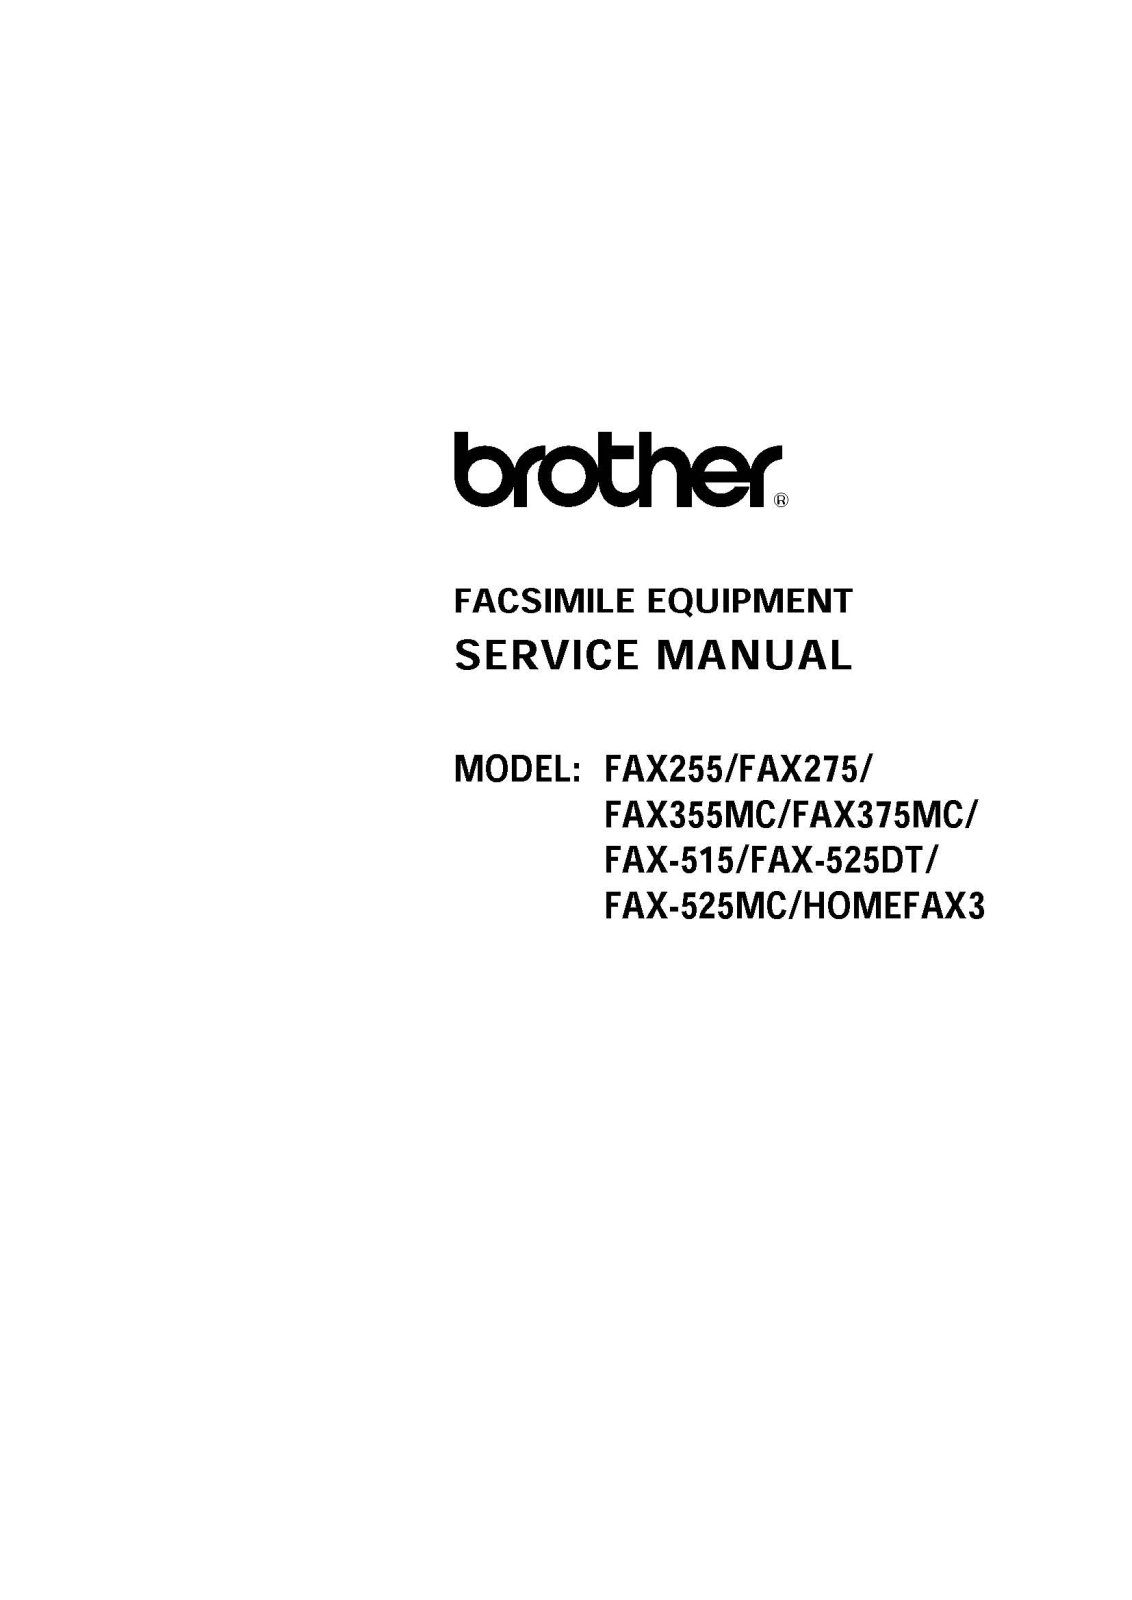 Brother FAX-525-MC, FAX-375MC, FAX-355MC, FAX-275, FAX-255 Service Manual